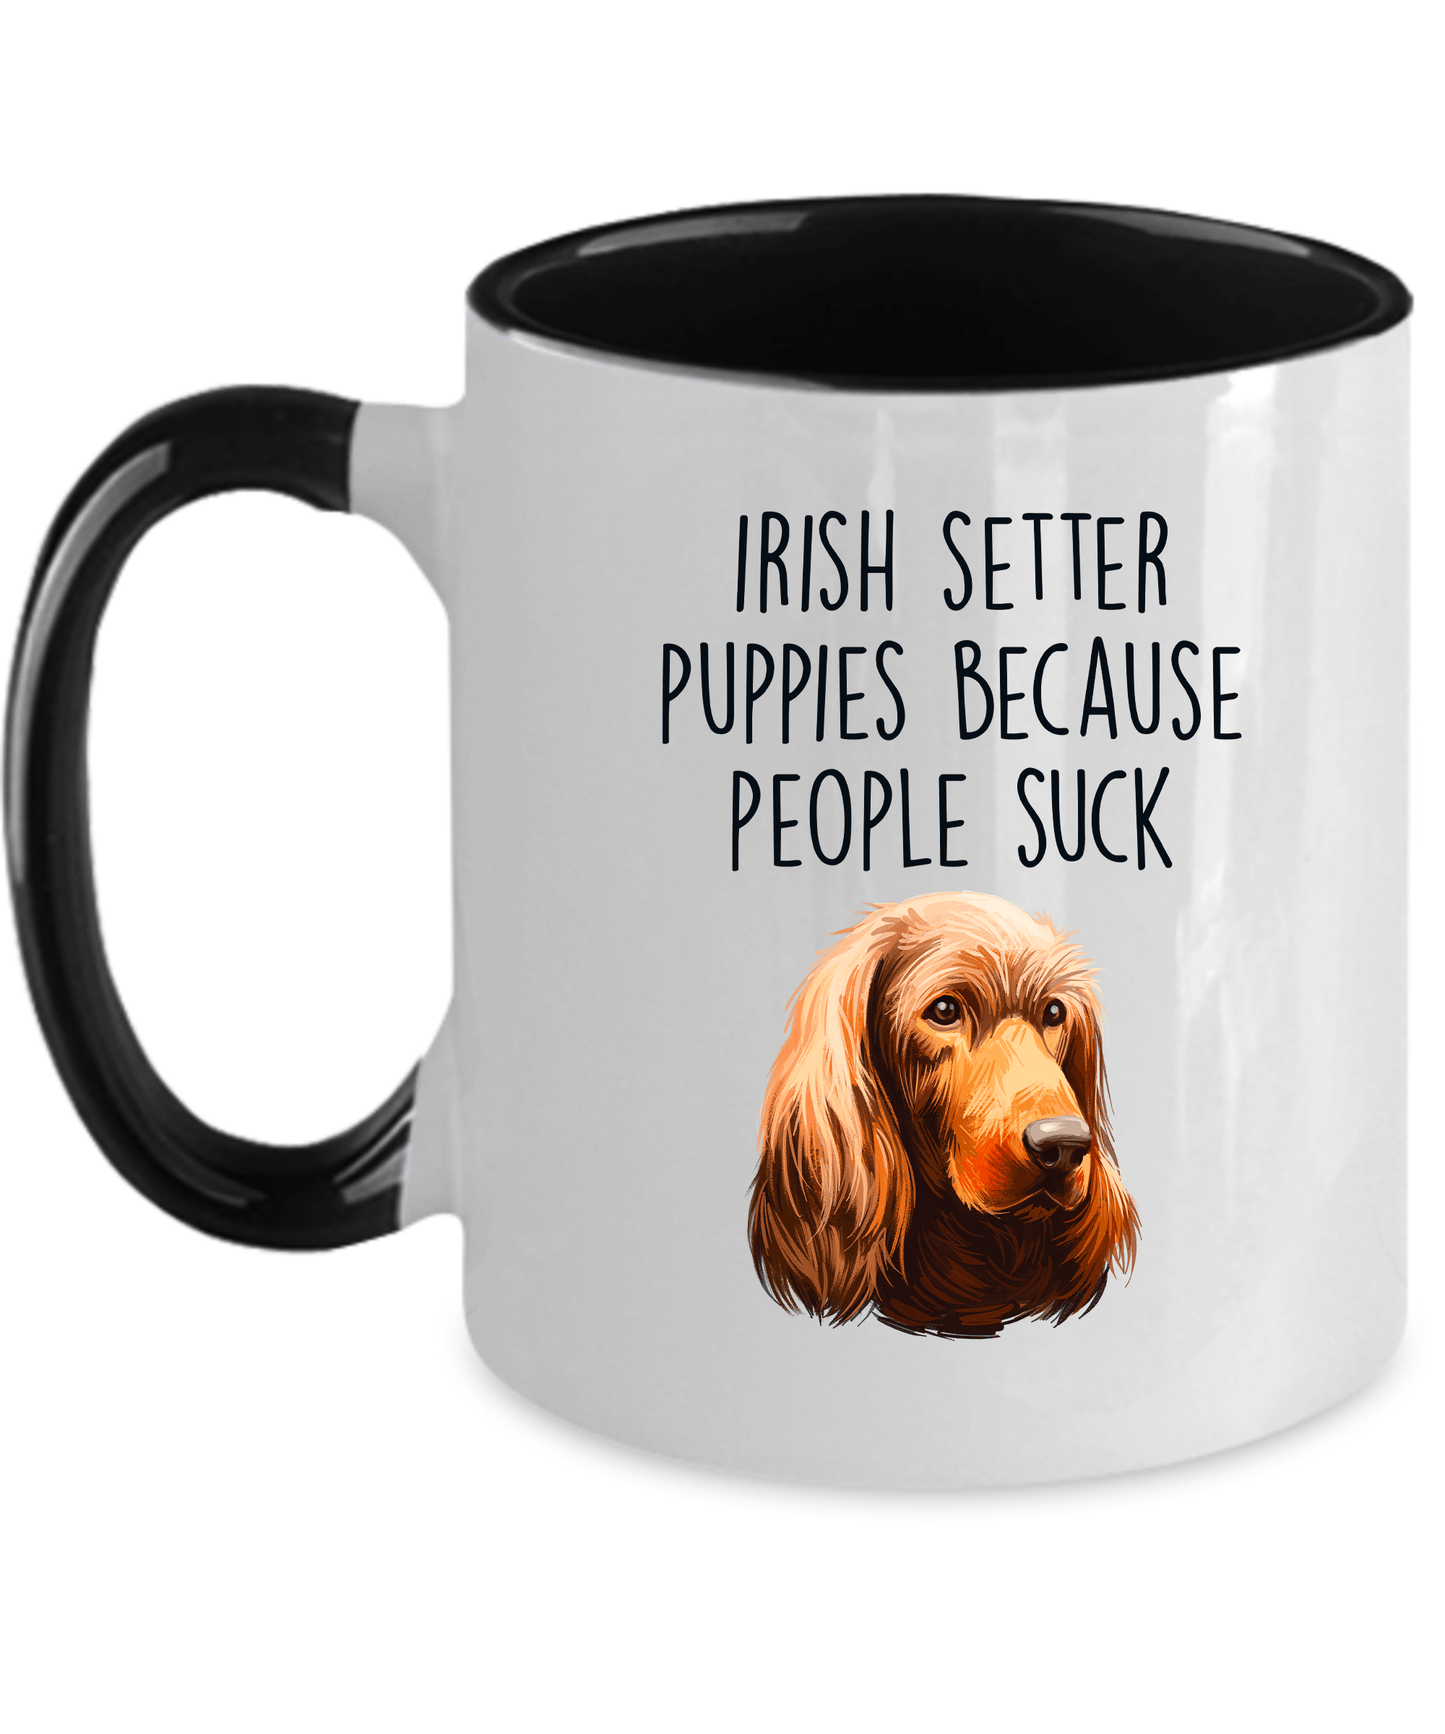 Irish Setter Puppies Because People Suck Funny Dog Ceramic Coffee Mug